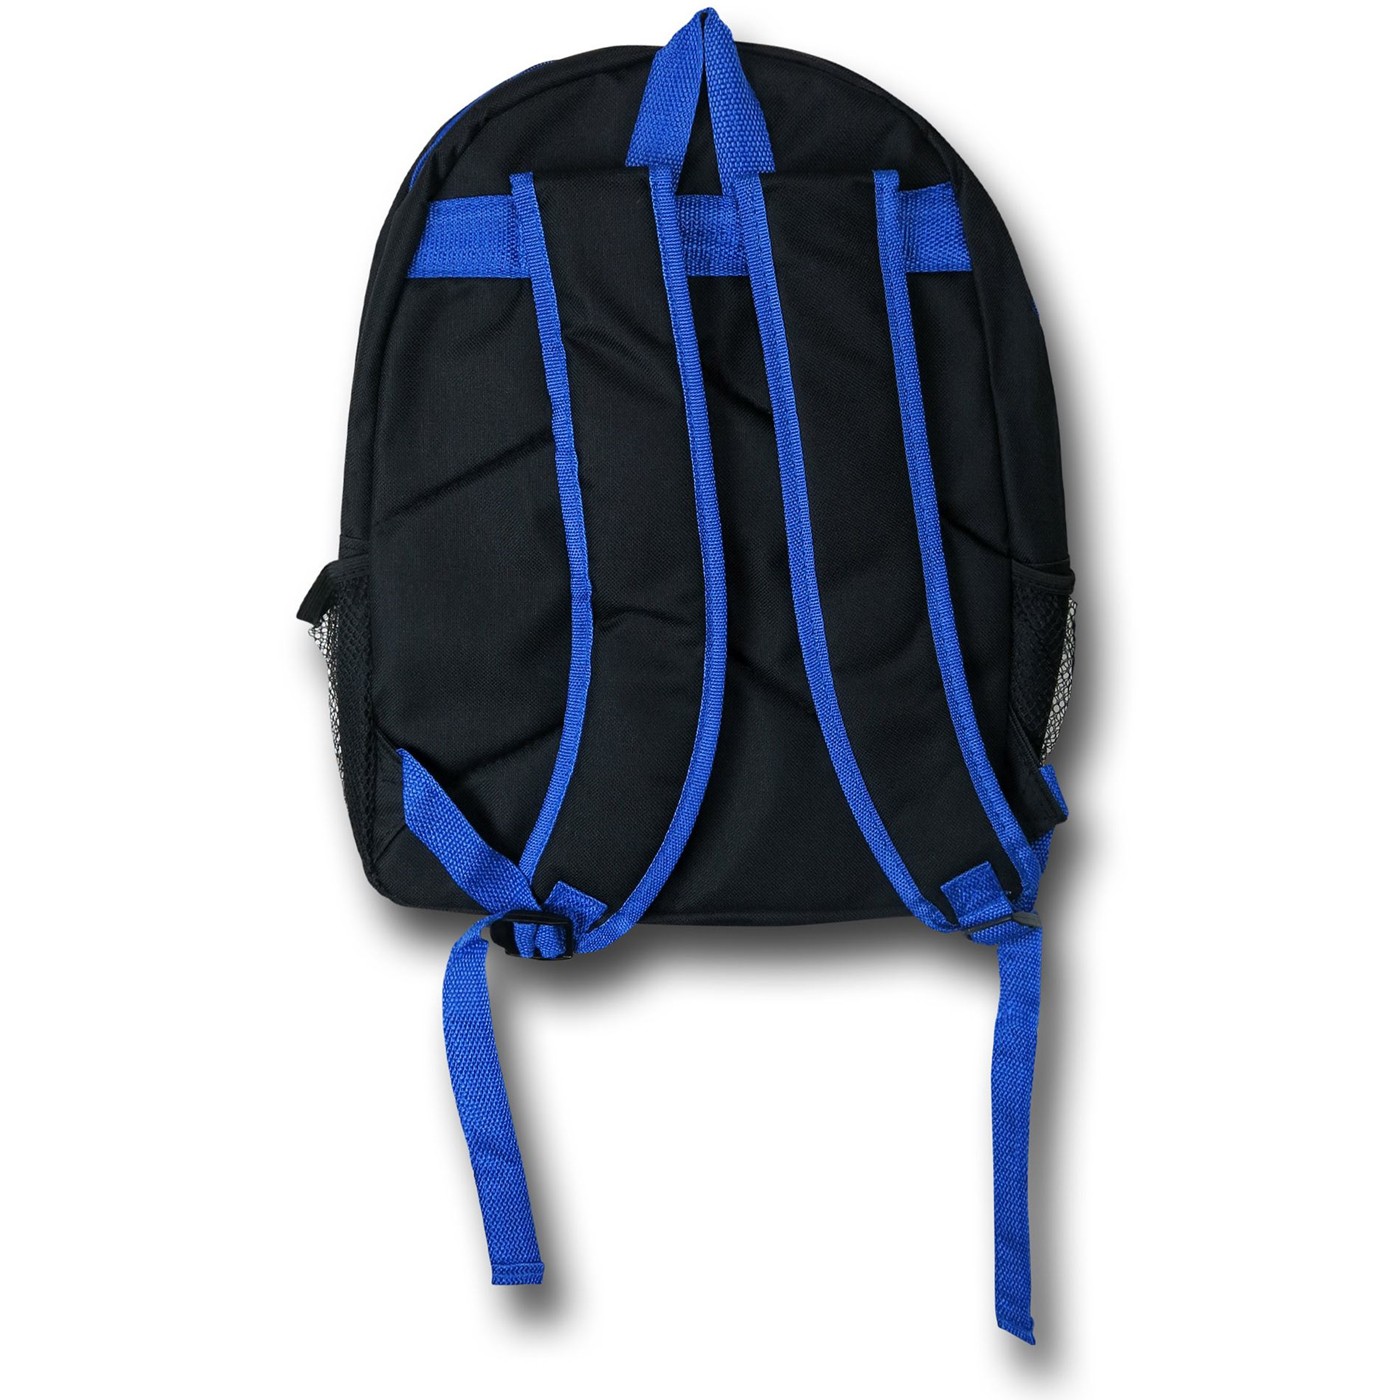 Batman Kids Backpack w/ Detachable Lunch Bag